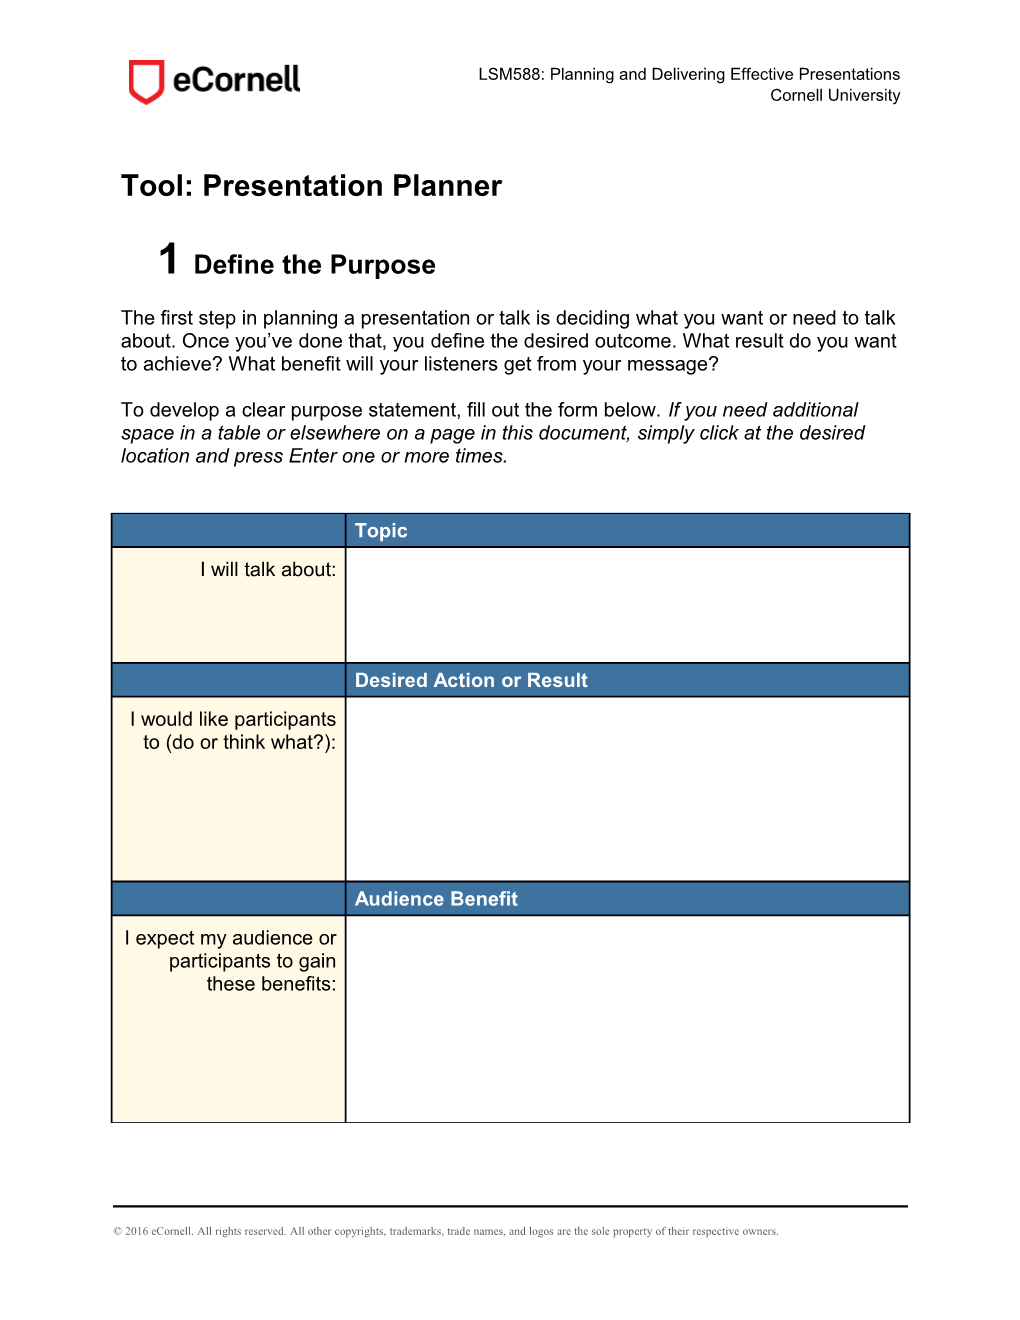 Tool: Presentationplanner 1 Define the Purpose